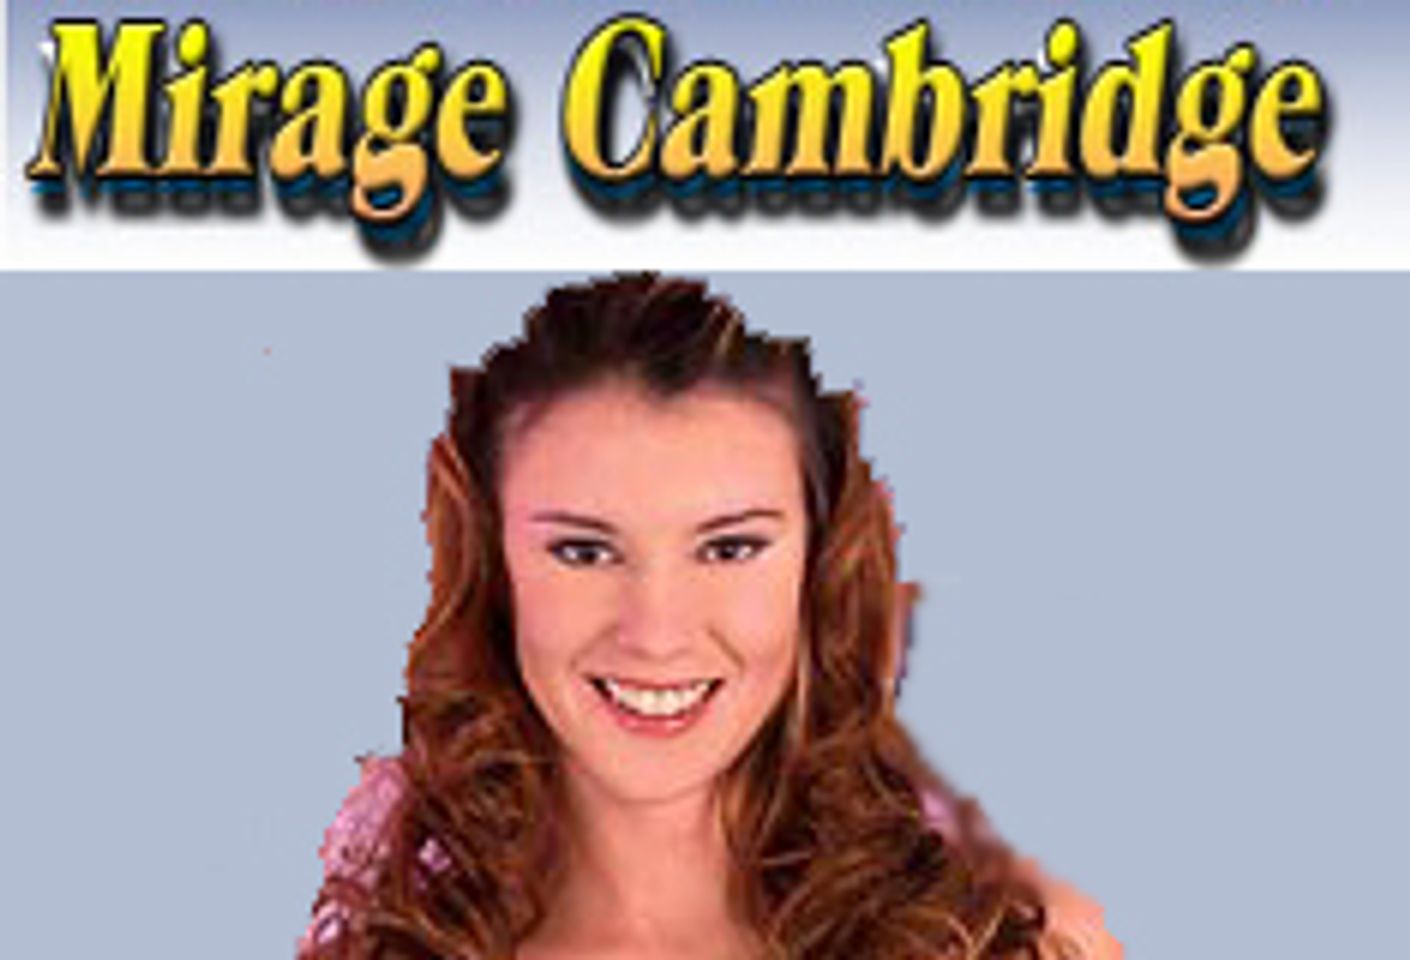 New Adult Video Content Production House: MirageCambridge.com